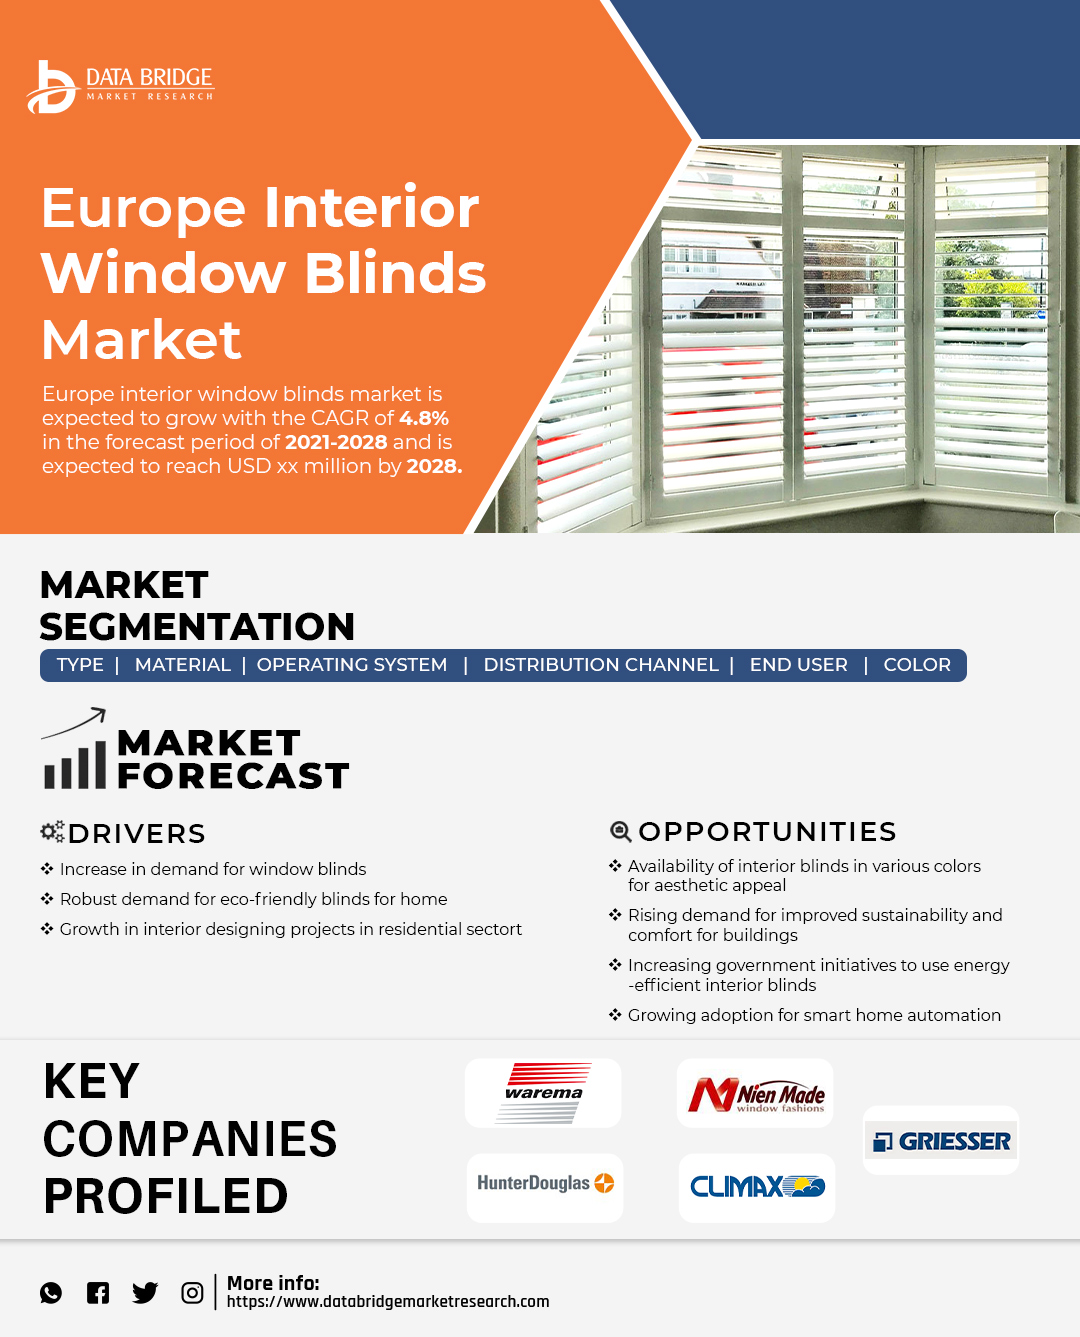 Europe Interior Window Blinds Market